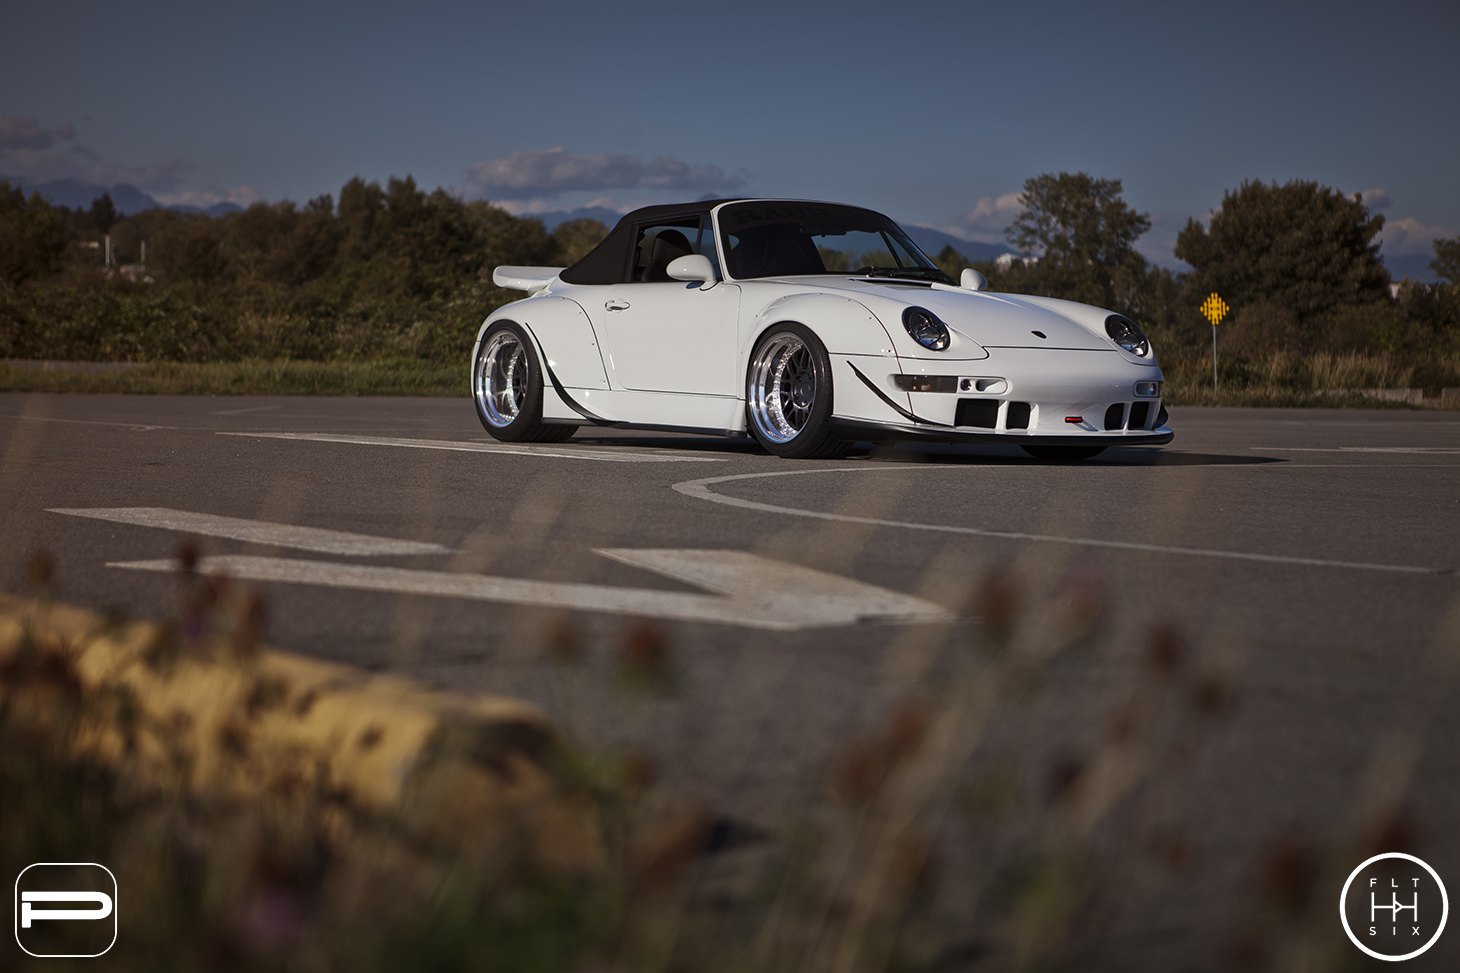 Aftermarket Front Bumper on White Porsche 911 - Photo by PUR Wheels